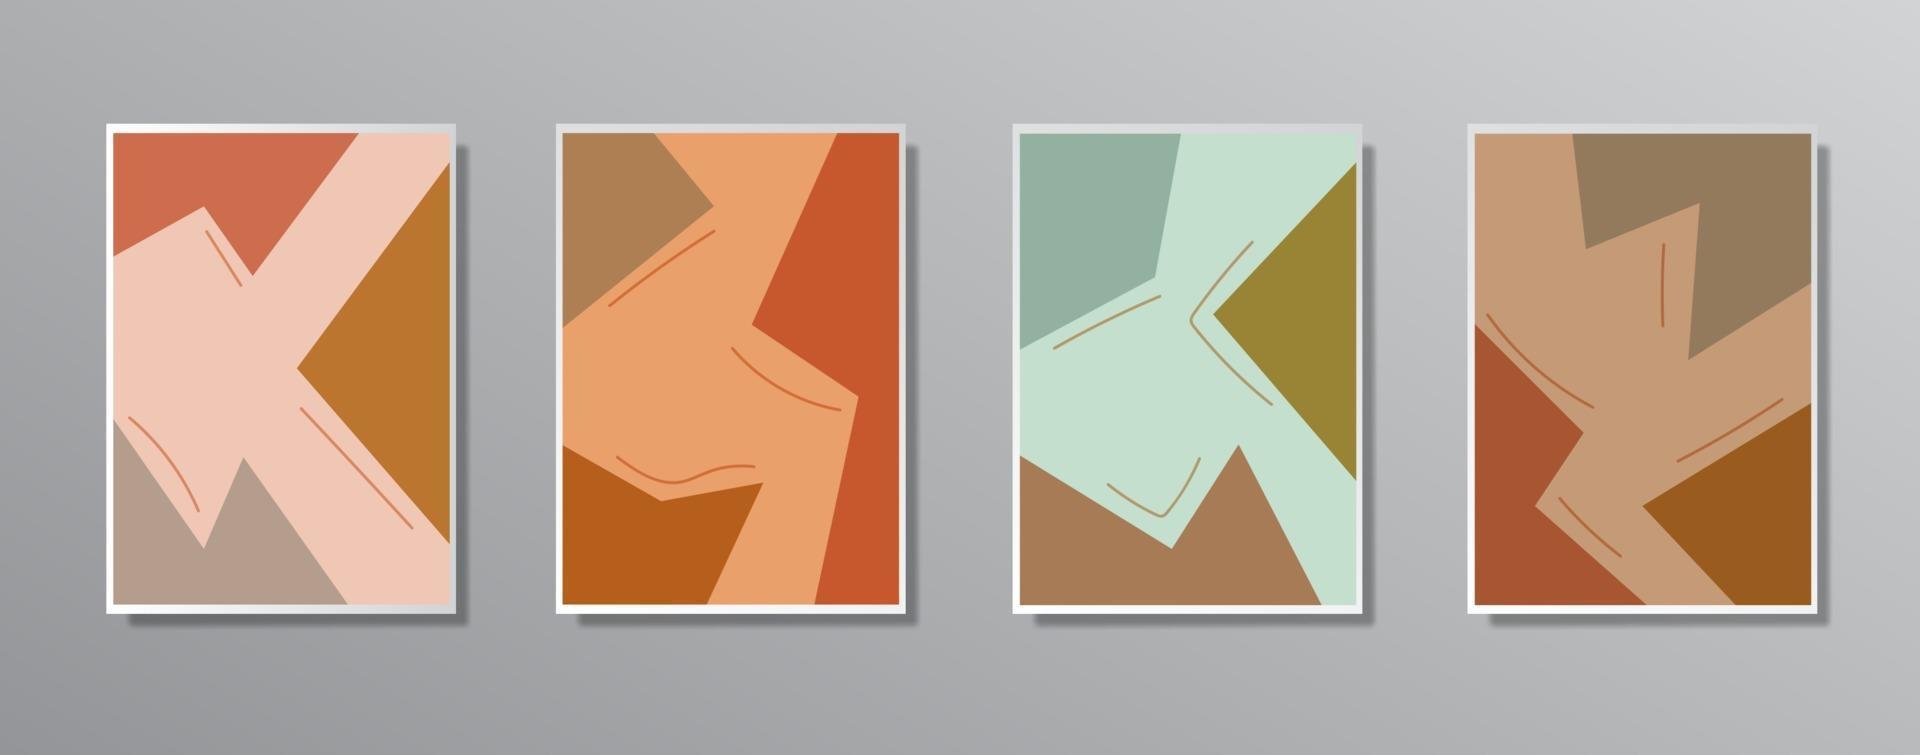 Set of creative minimalist hand drawn vintage neutral color illustrations vector